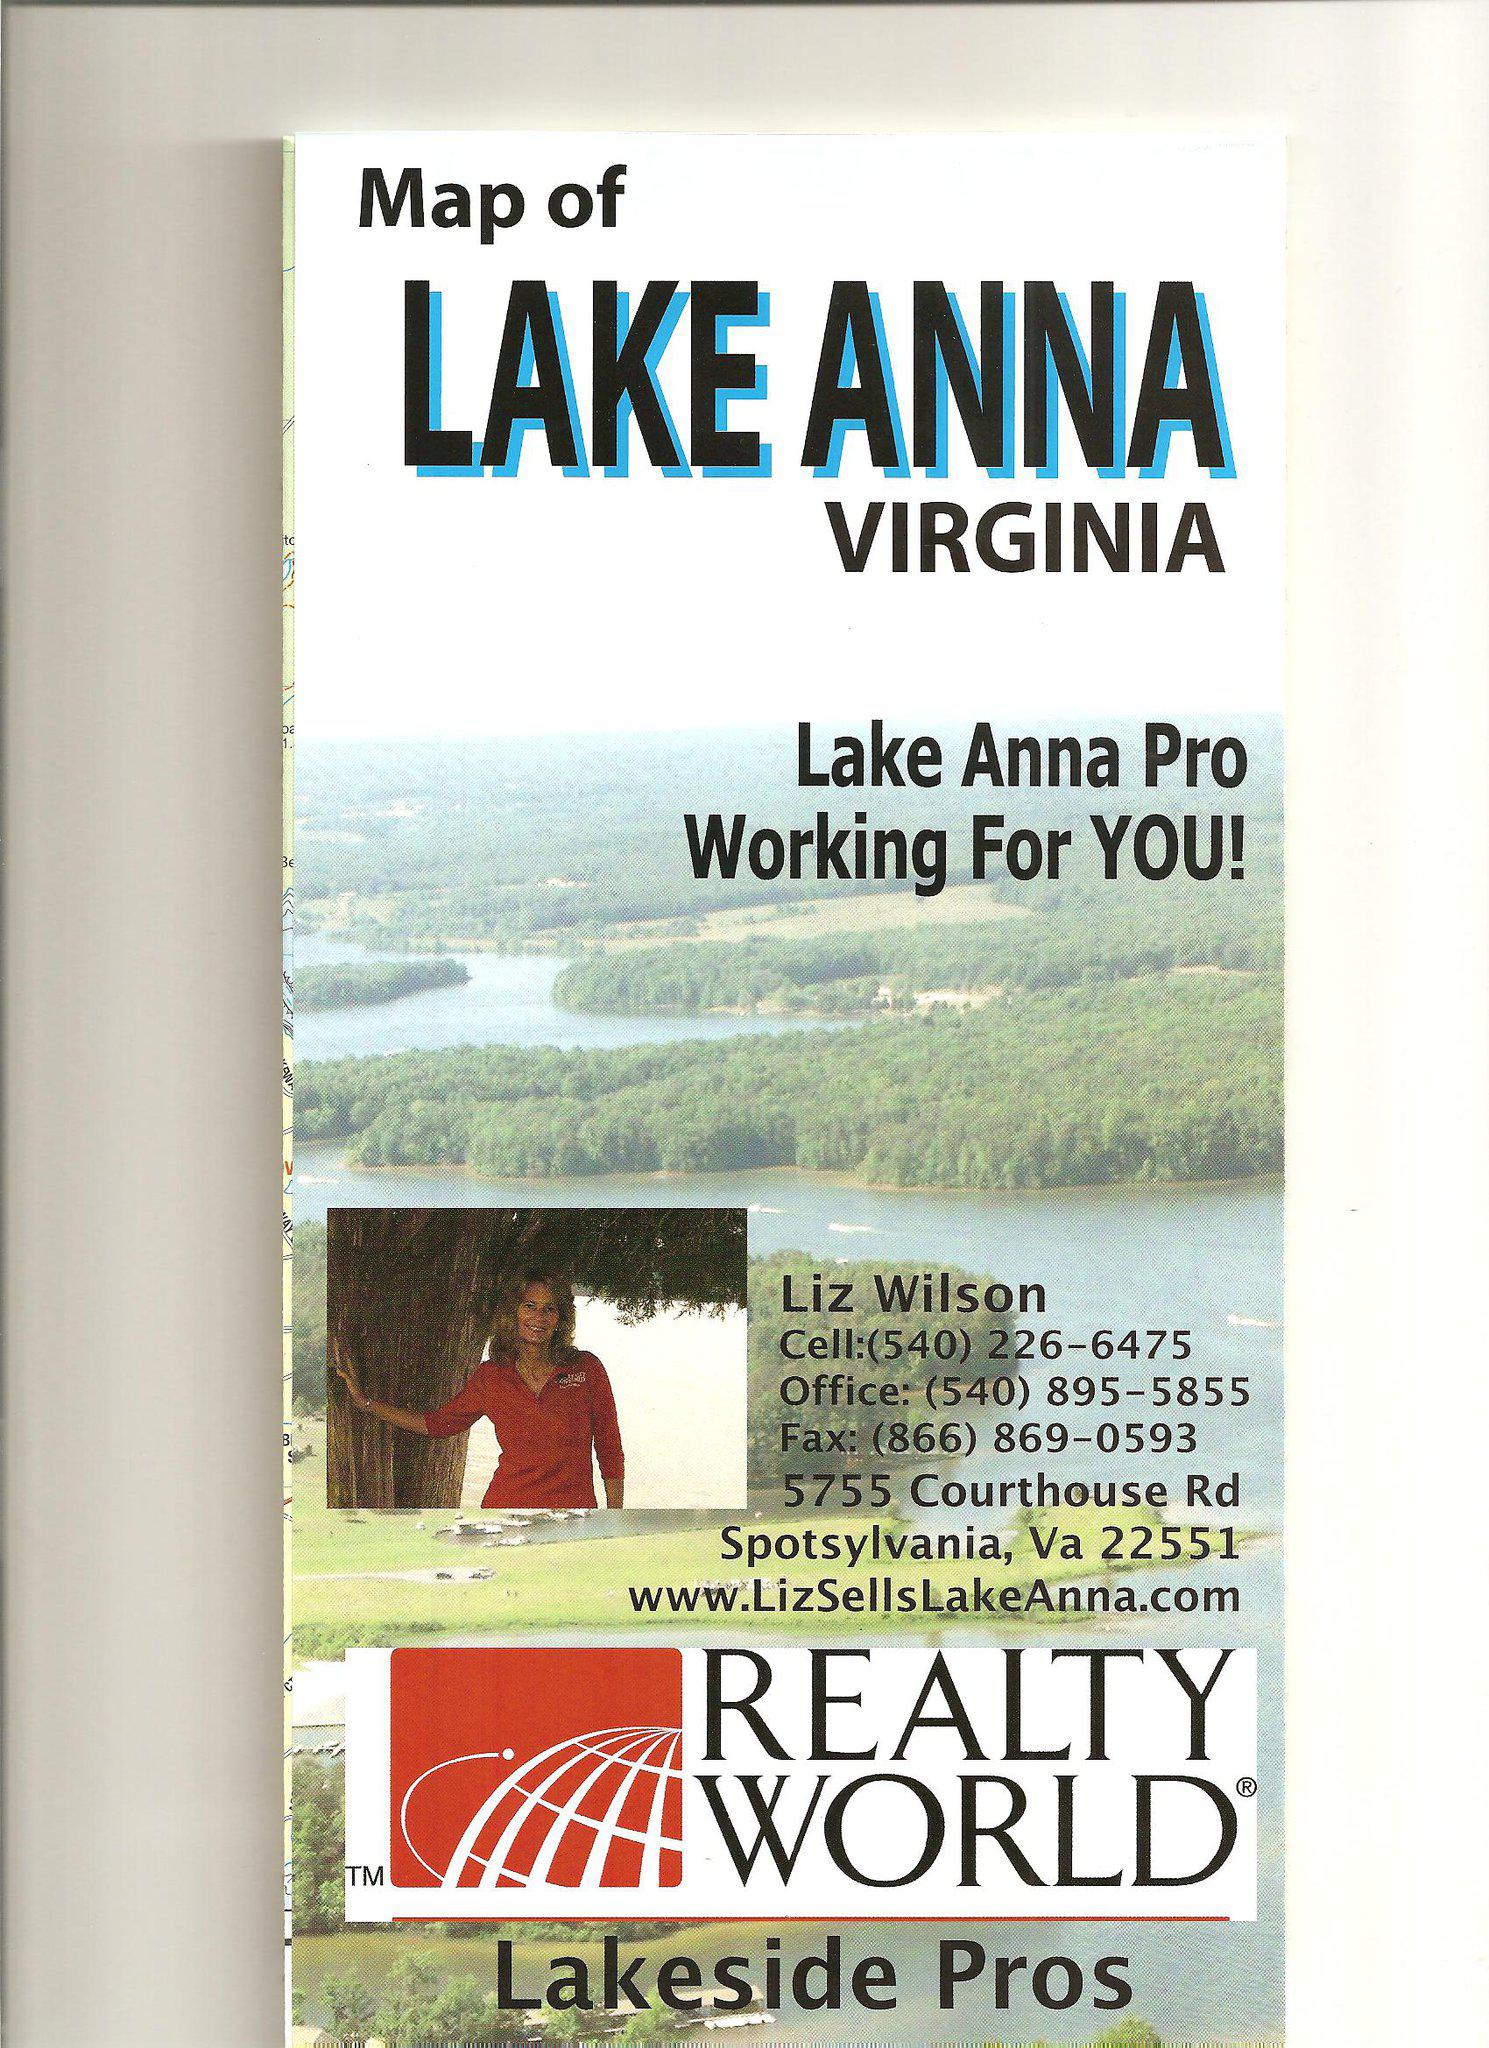 Liz Wilson Long & Foster Real Estate Spotsylvania (540)226-6475